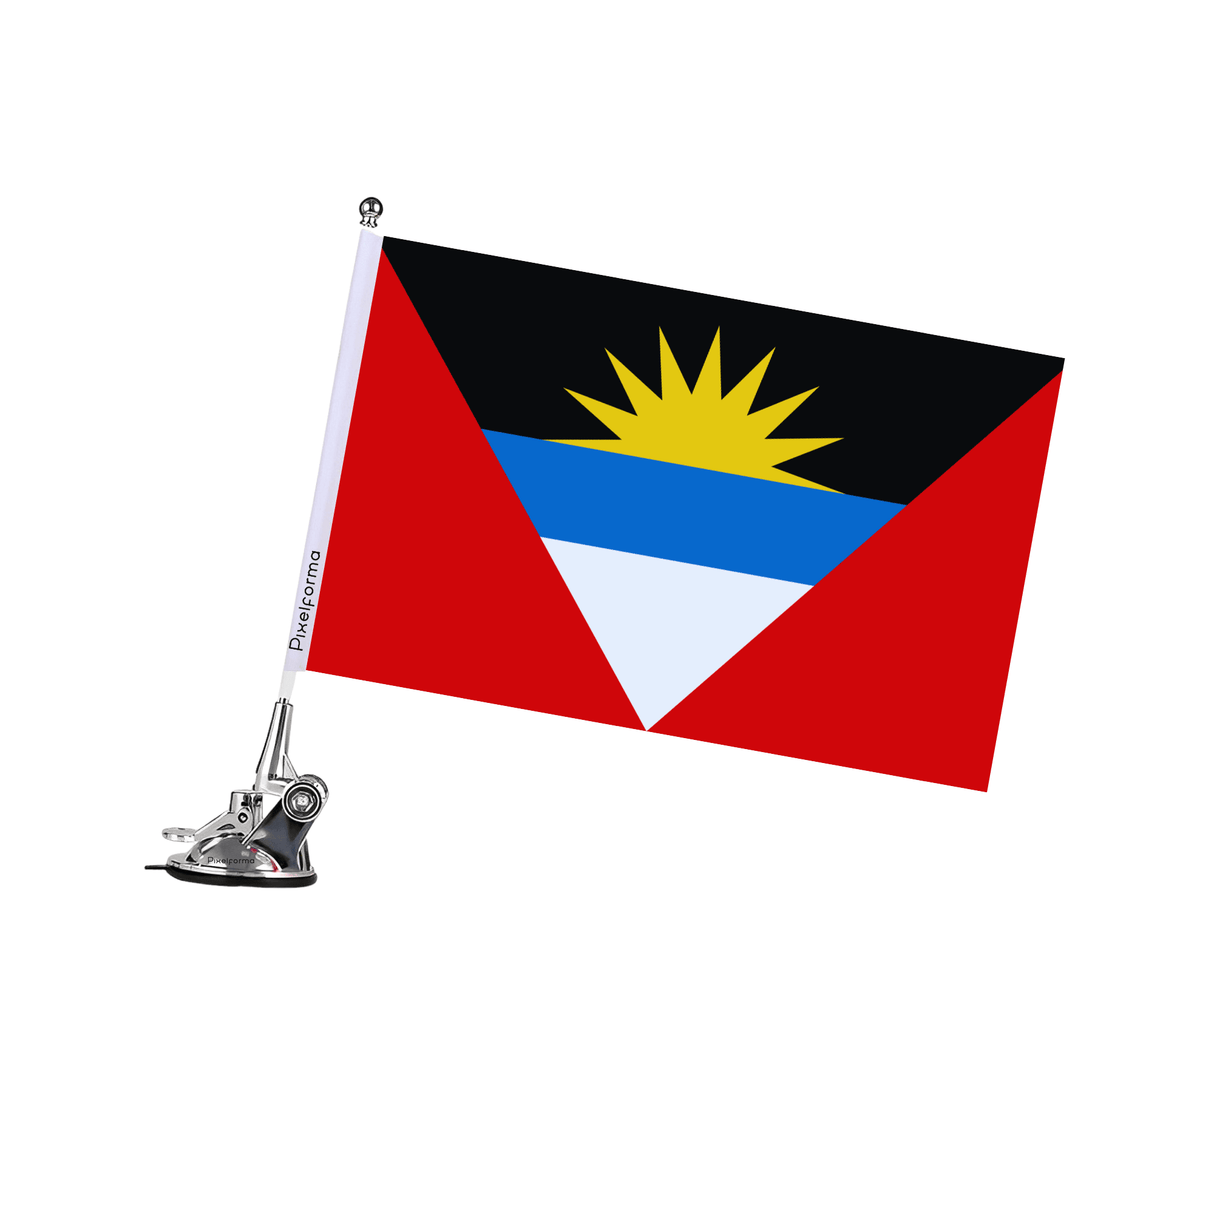 Mât à Ventouse Drapeau d'Antigua-et-Barbuda - Pixelforma 